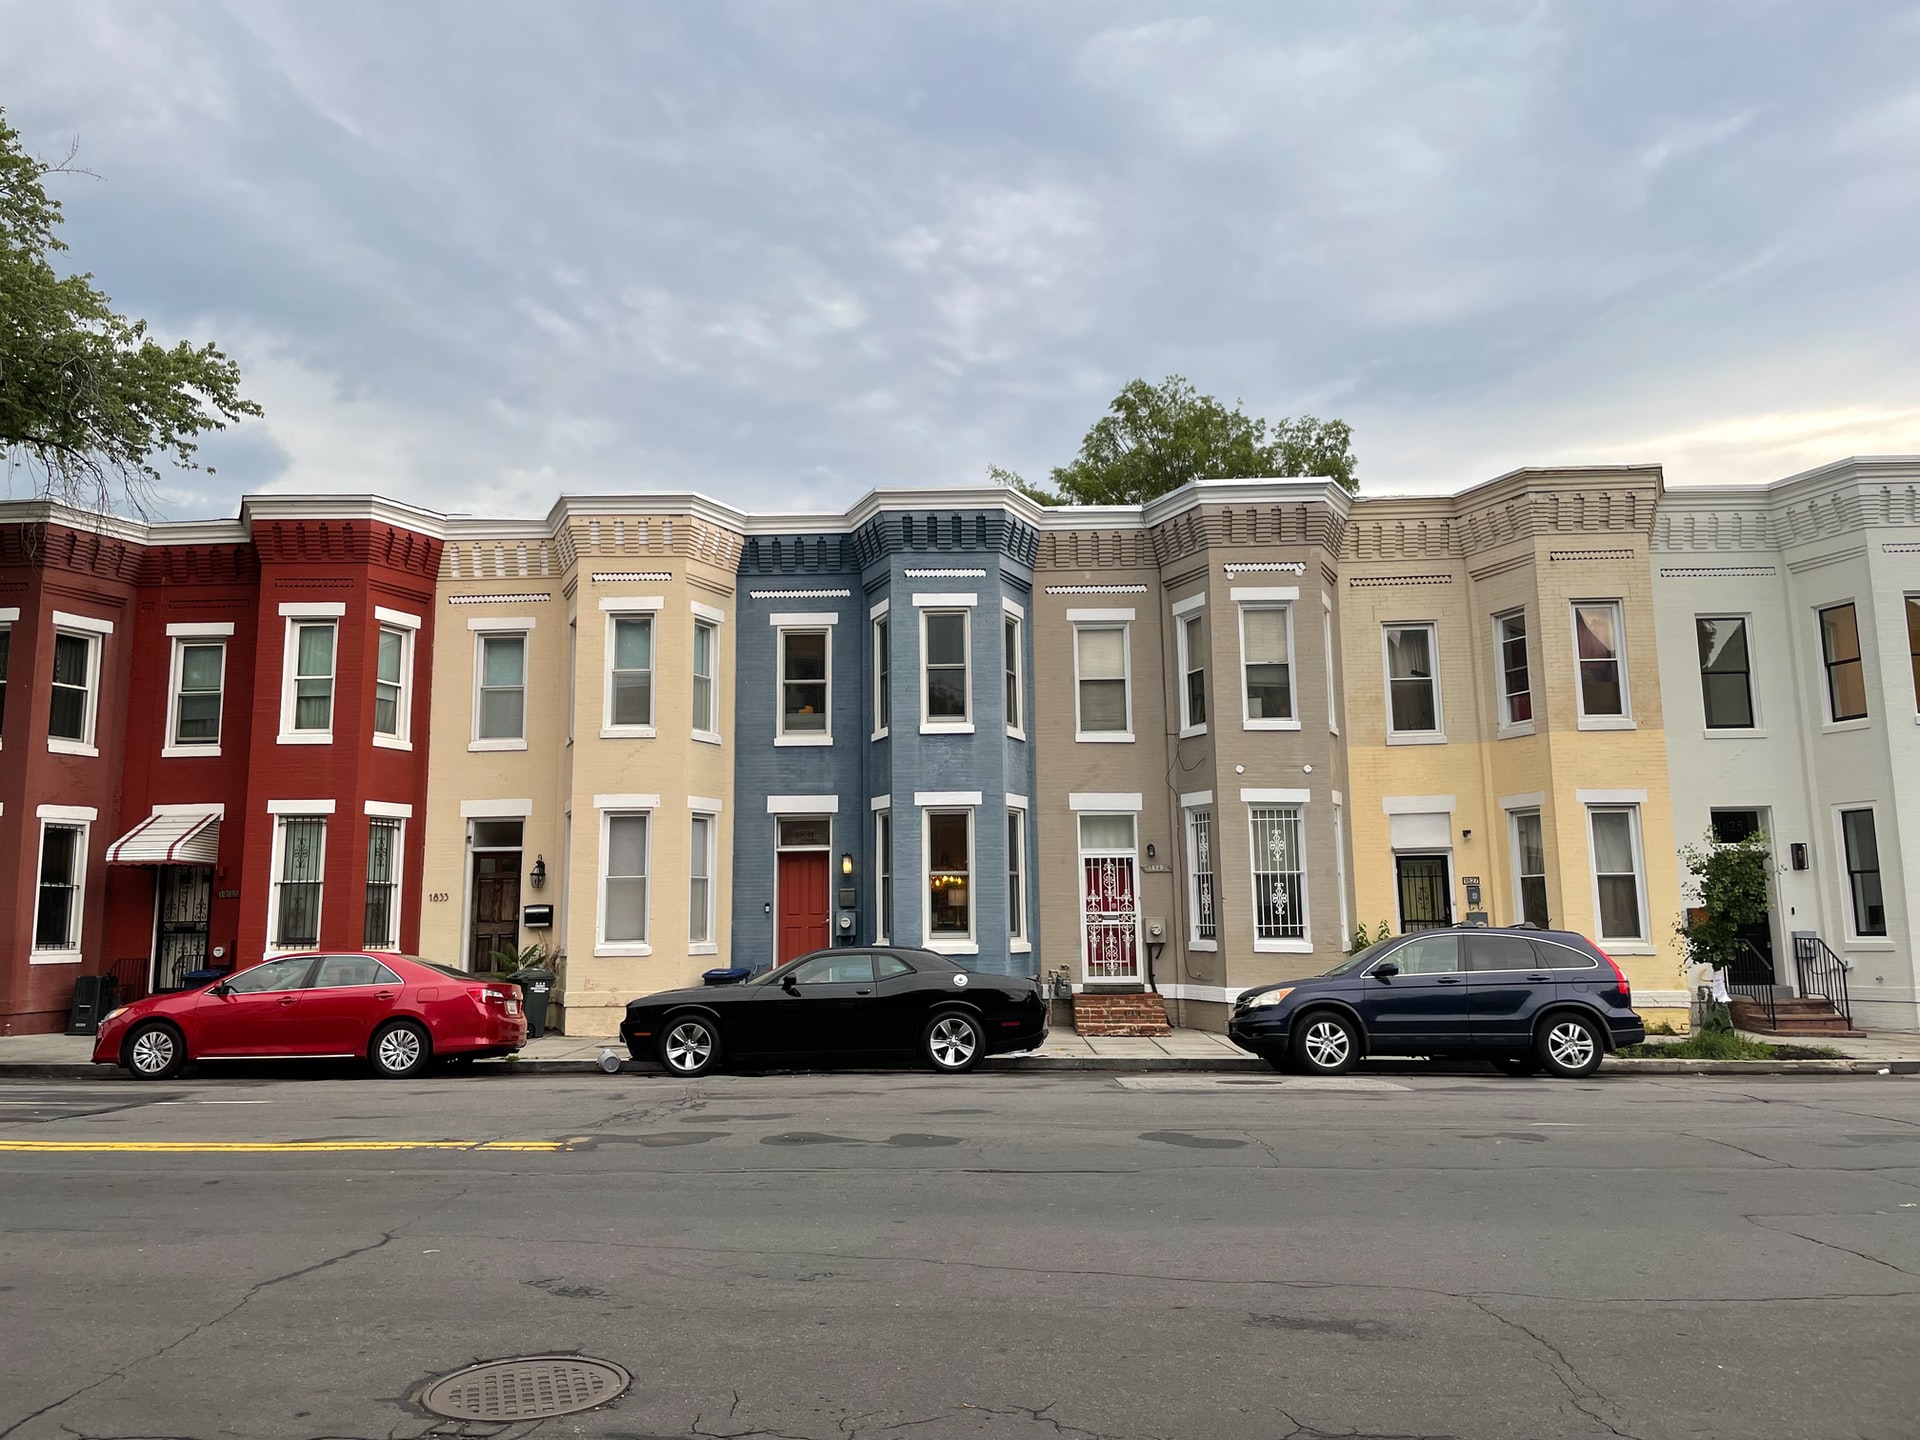 Row houses in Washington, DC